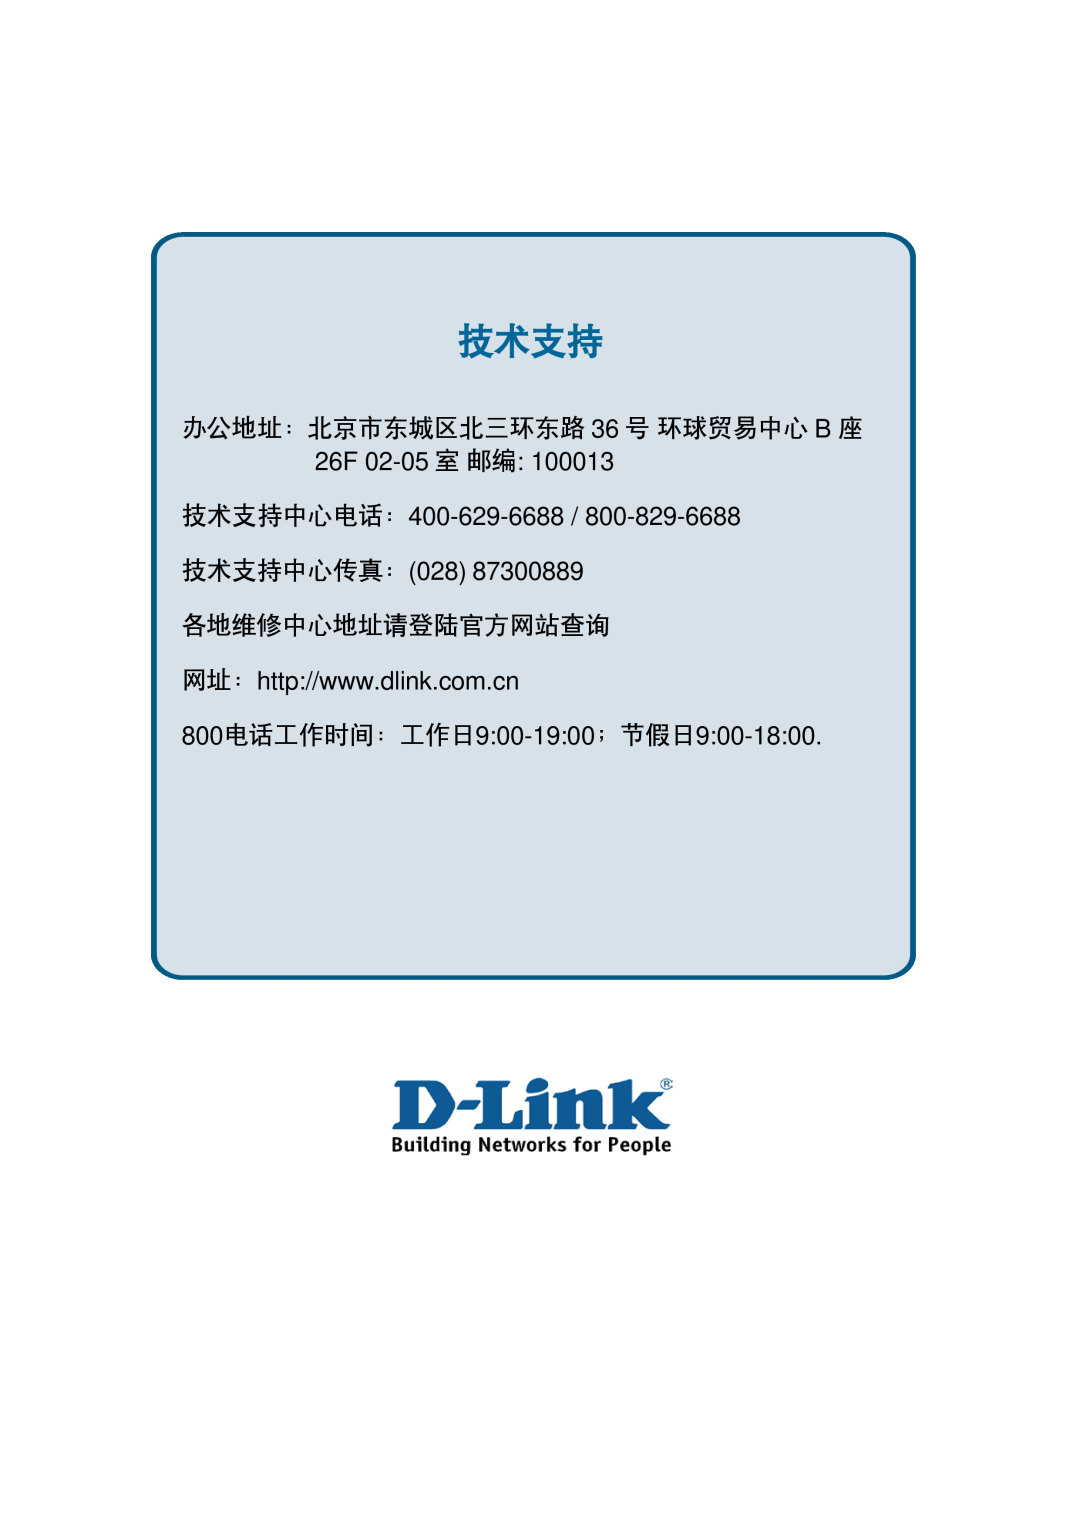 D-Link ethernet managed switch 技术支持中心电话：400-629-6688 技术支持中心传真：028, 800电话工作时间：工作日900-1900；节假日900-1800, 各地维修中心地址请登陆官方网站查询 